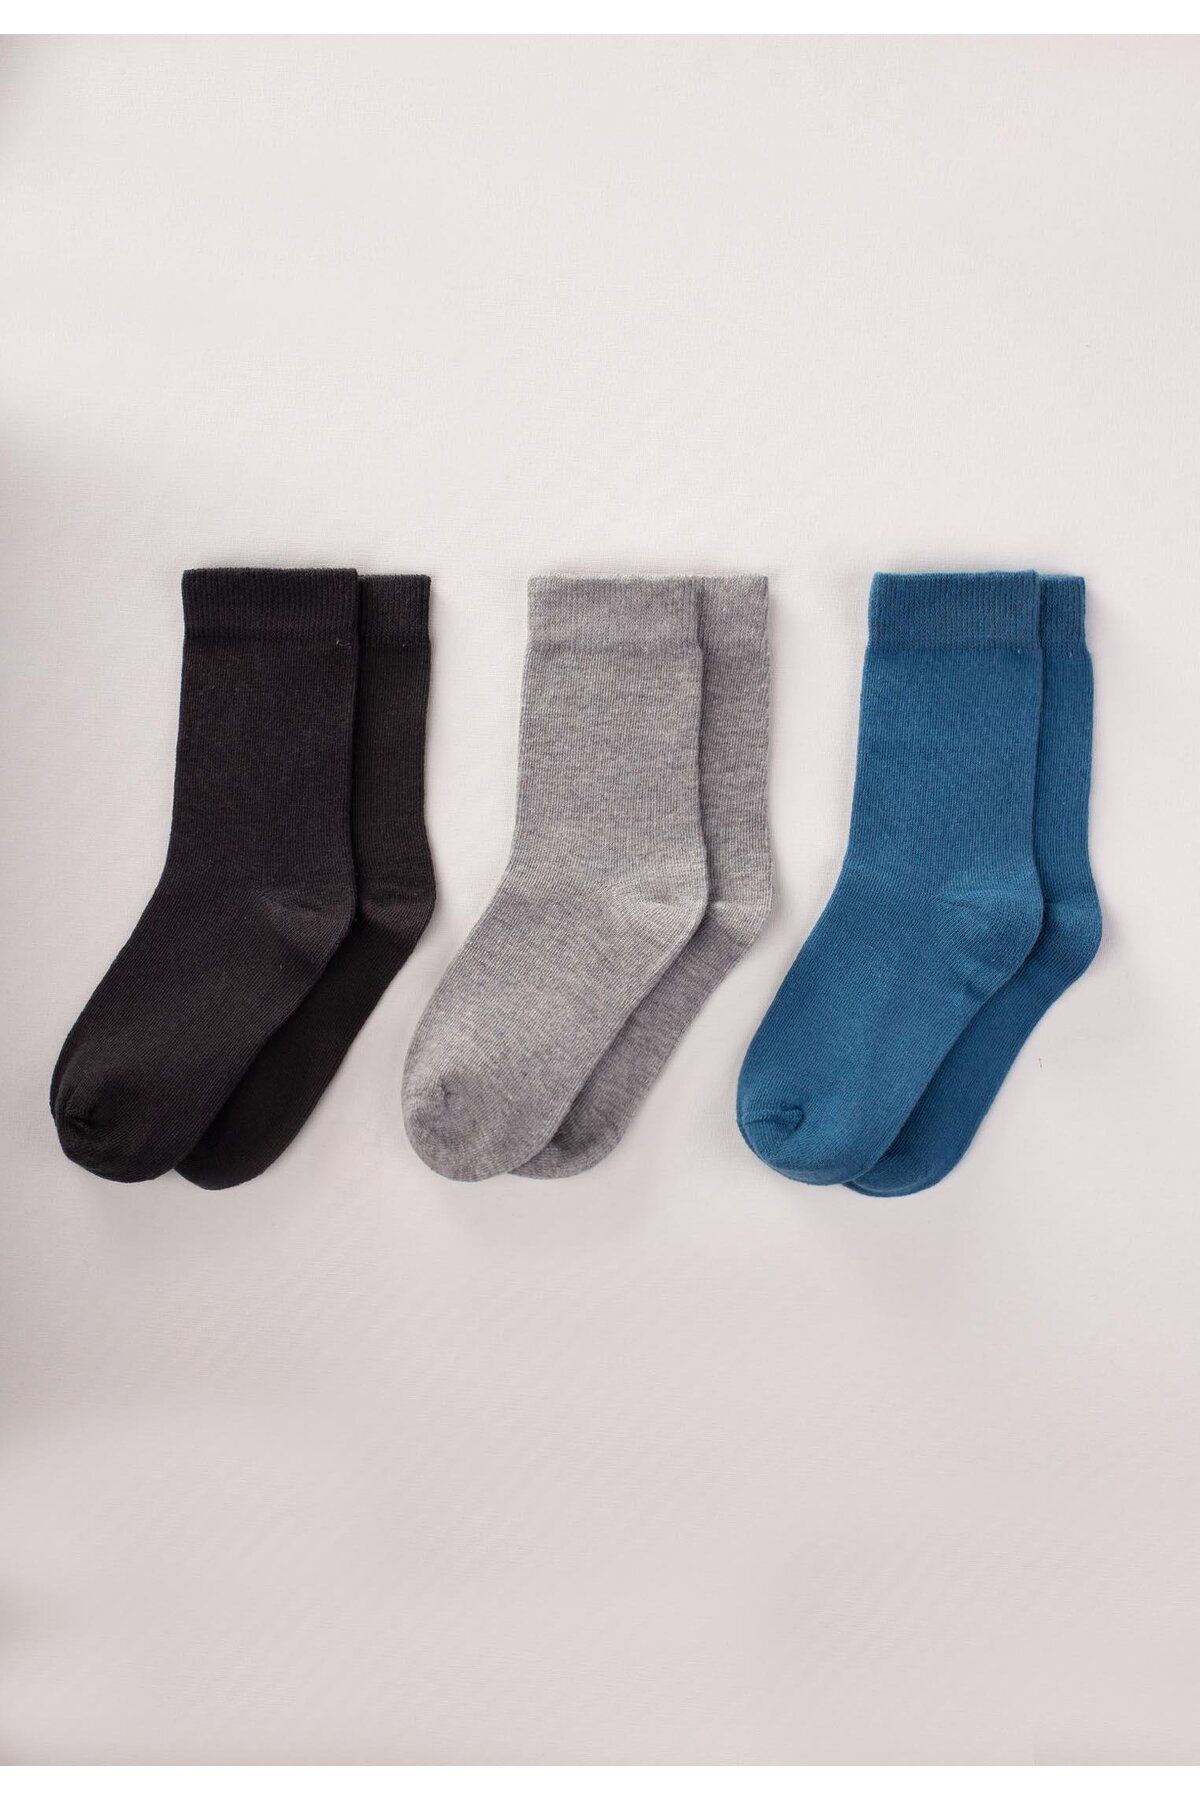 Cigit Üçlü Basic Soket Çorap 2-9 Yaş İndigo Füme Gri